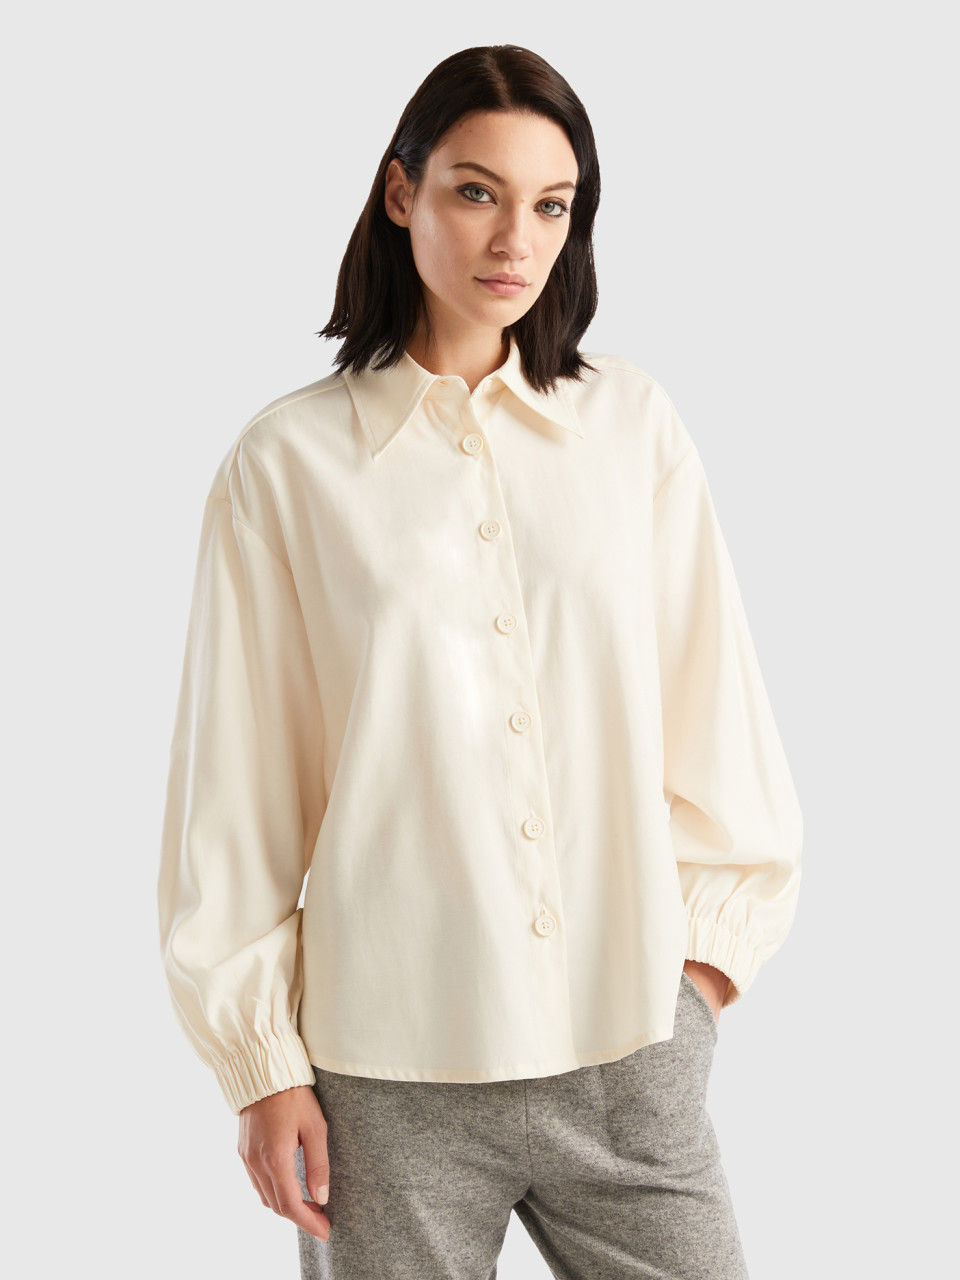 Benetton, Viscose And Linen Shirt, Creamy White, Women